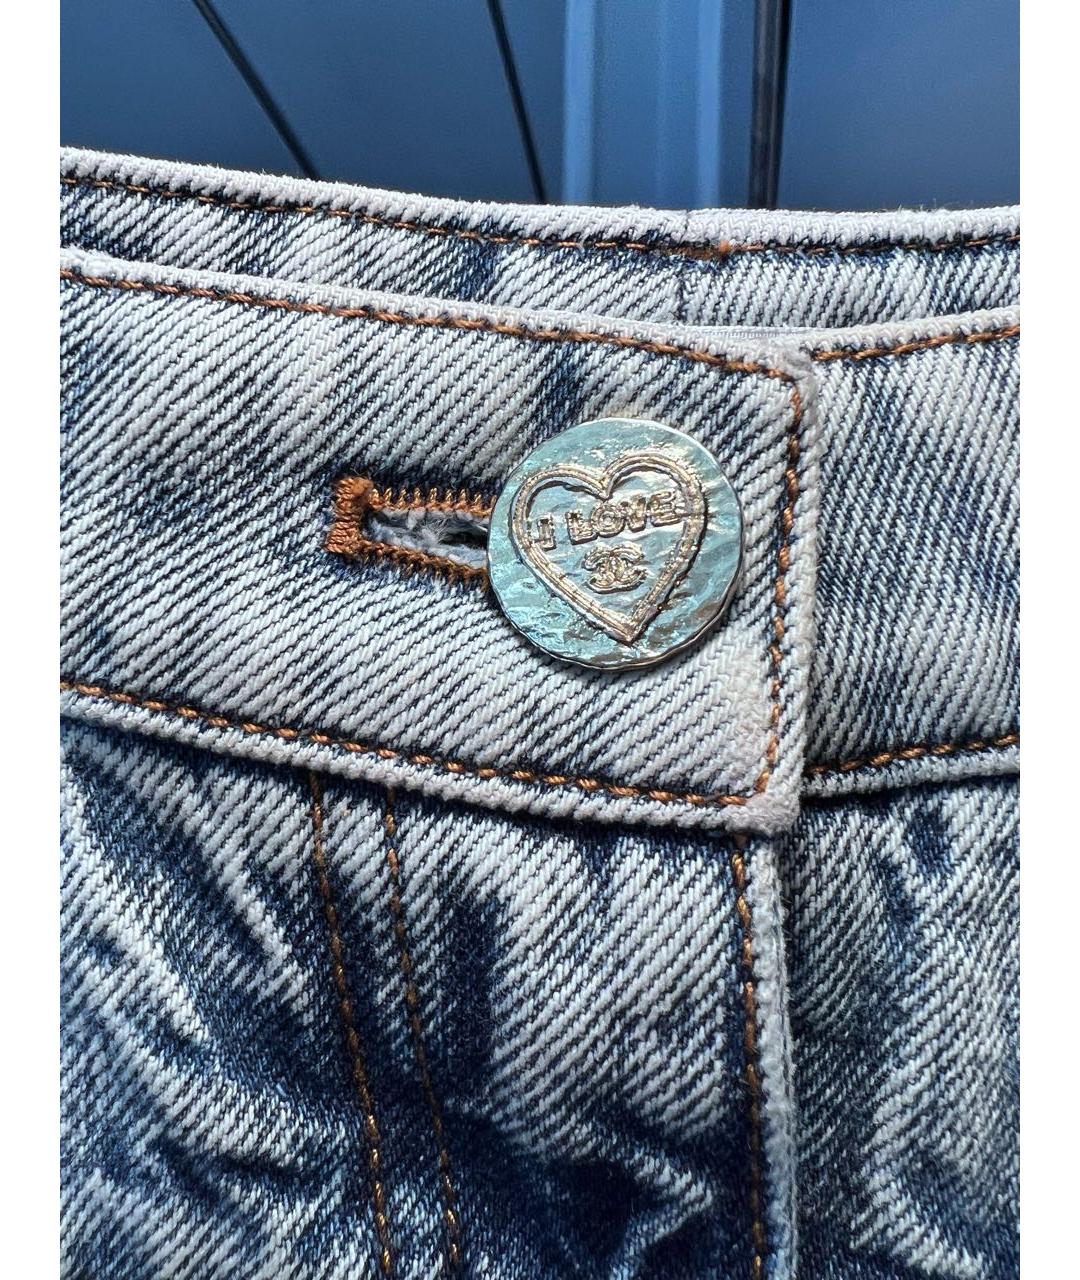 CHANEL PRE-OWNED Хлопковые джинсы слим, фото 3